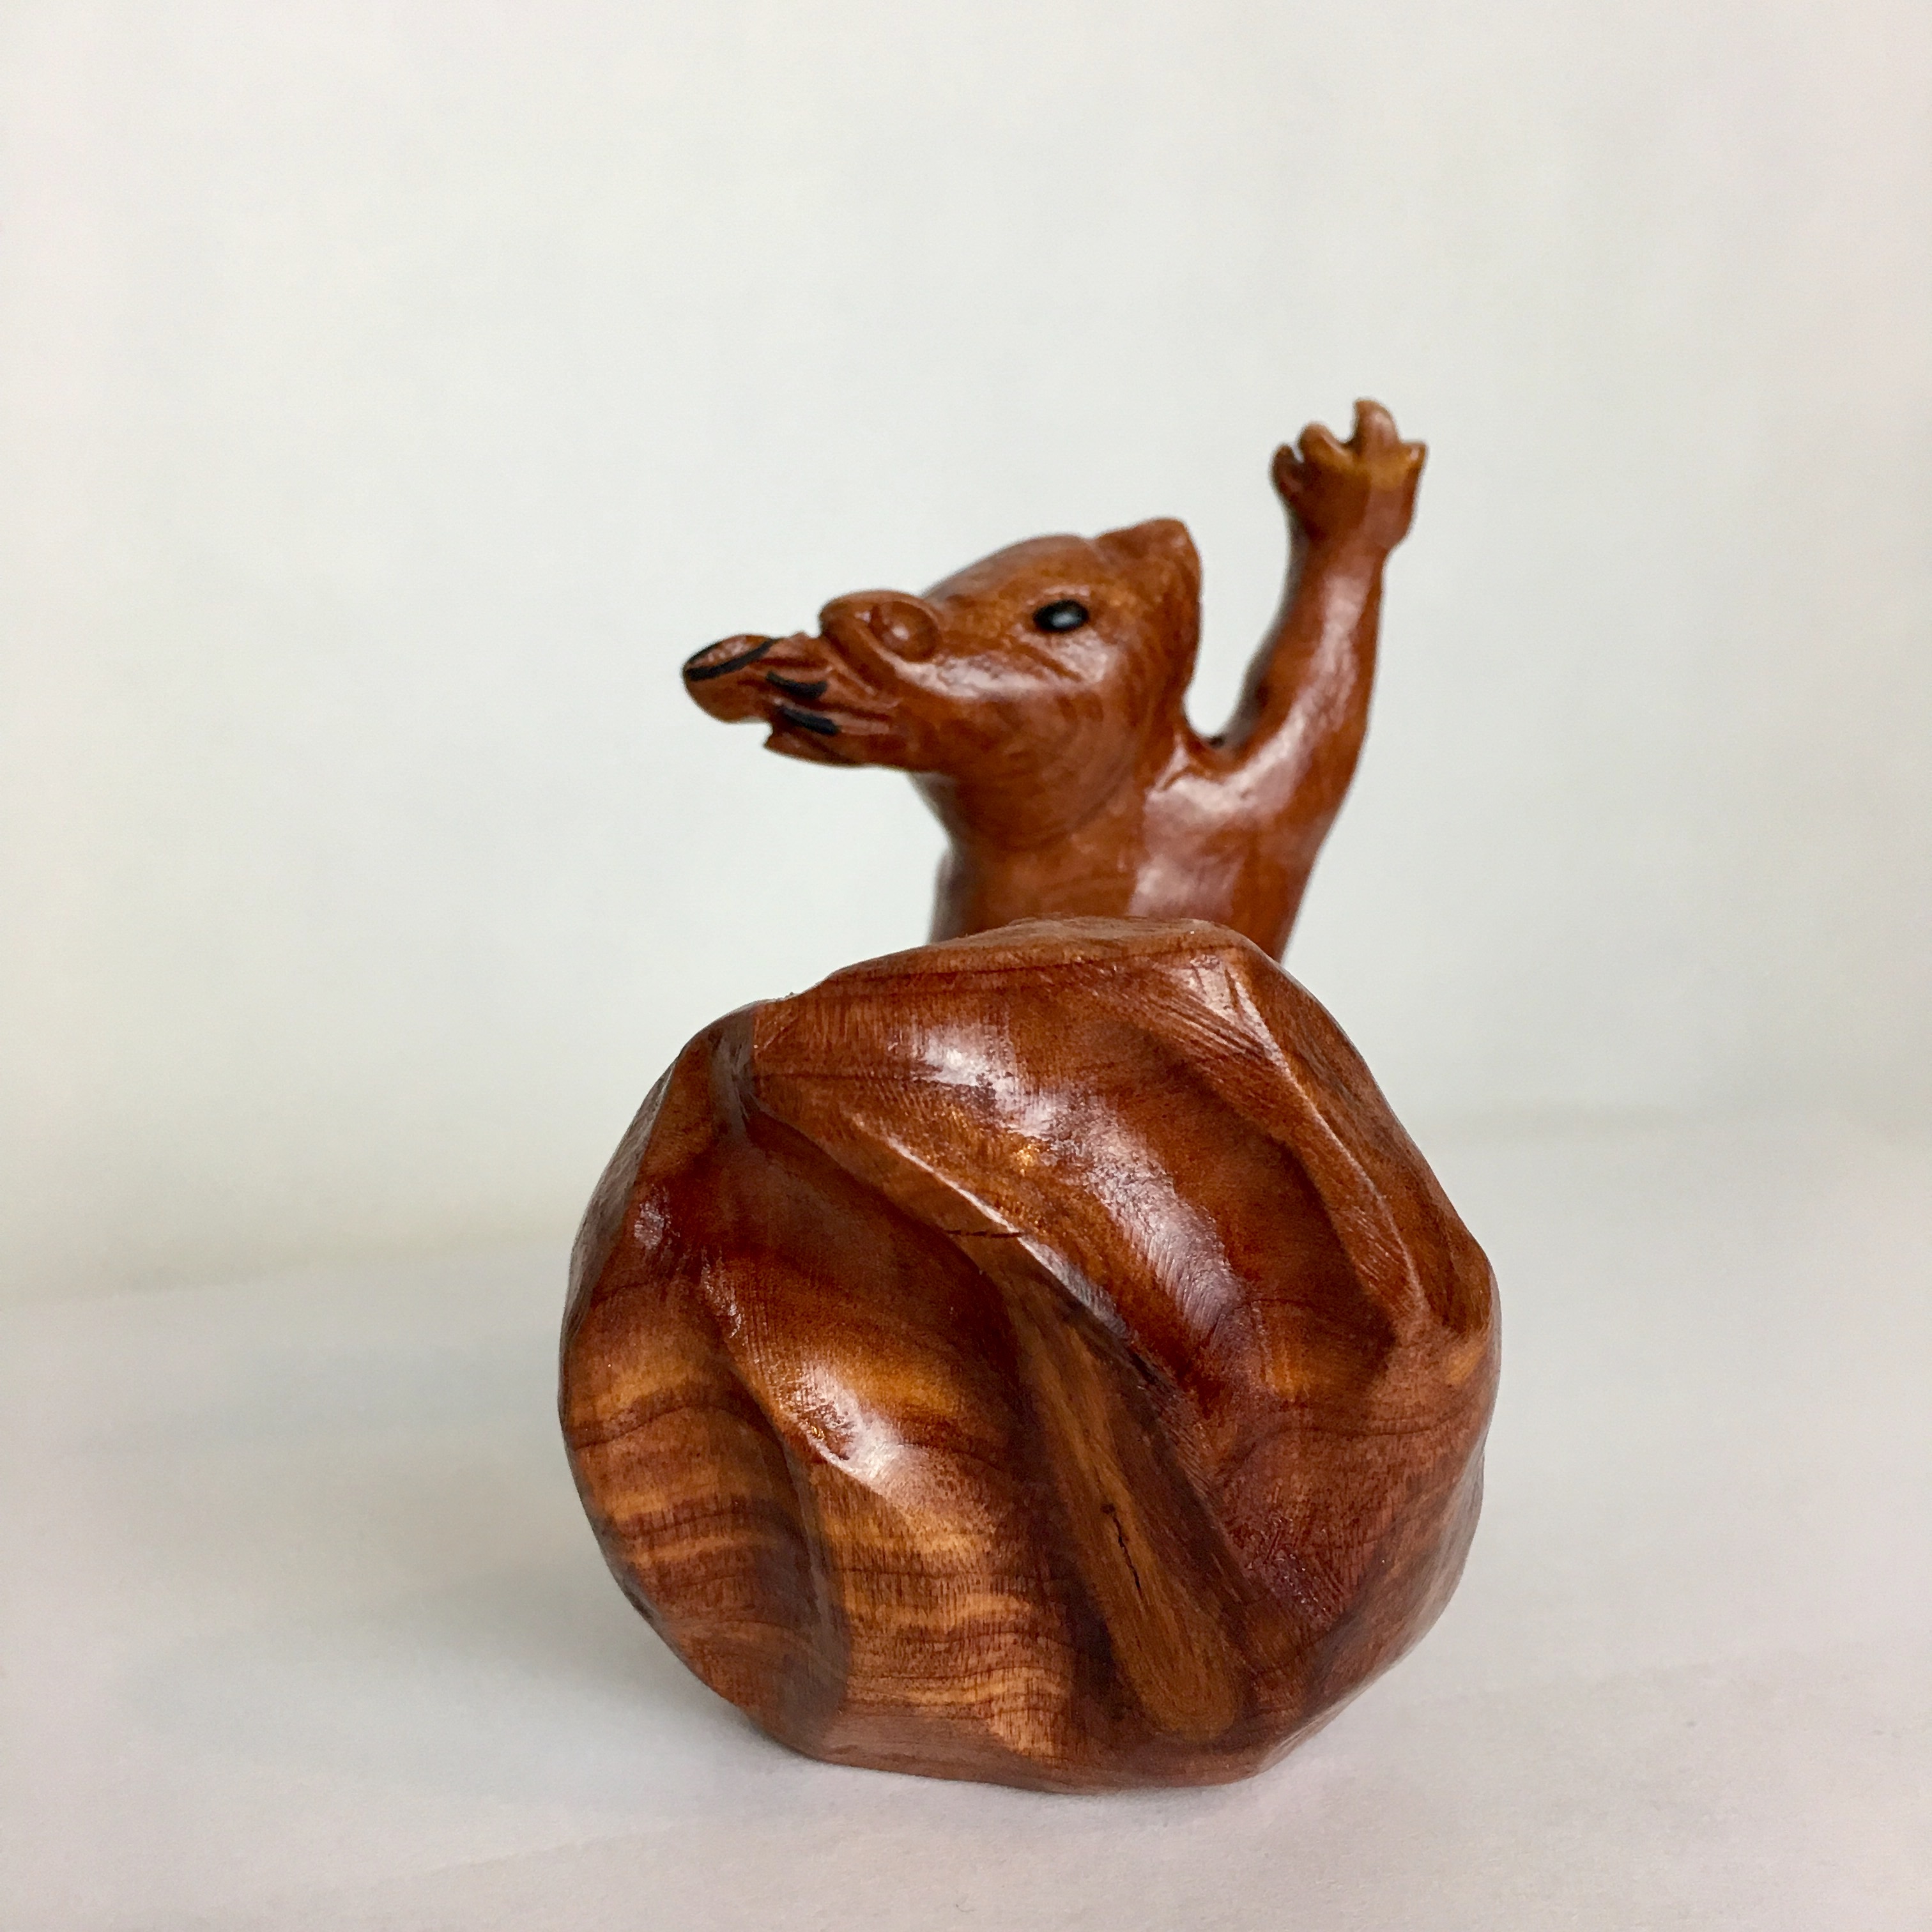 Squirrel on wood photo